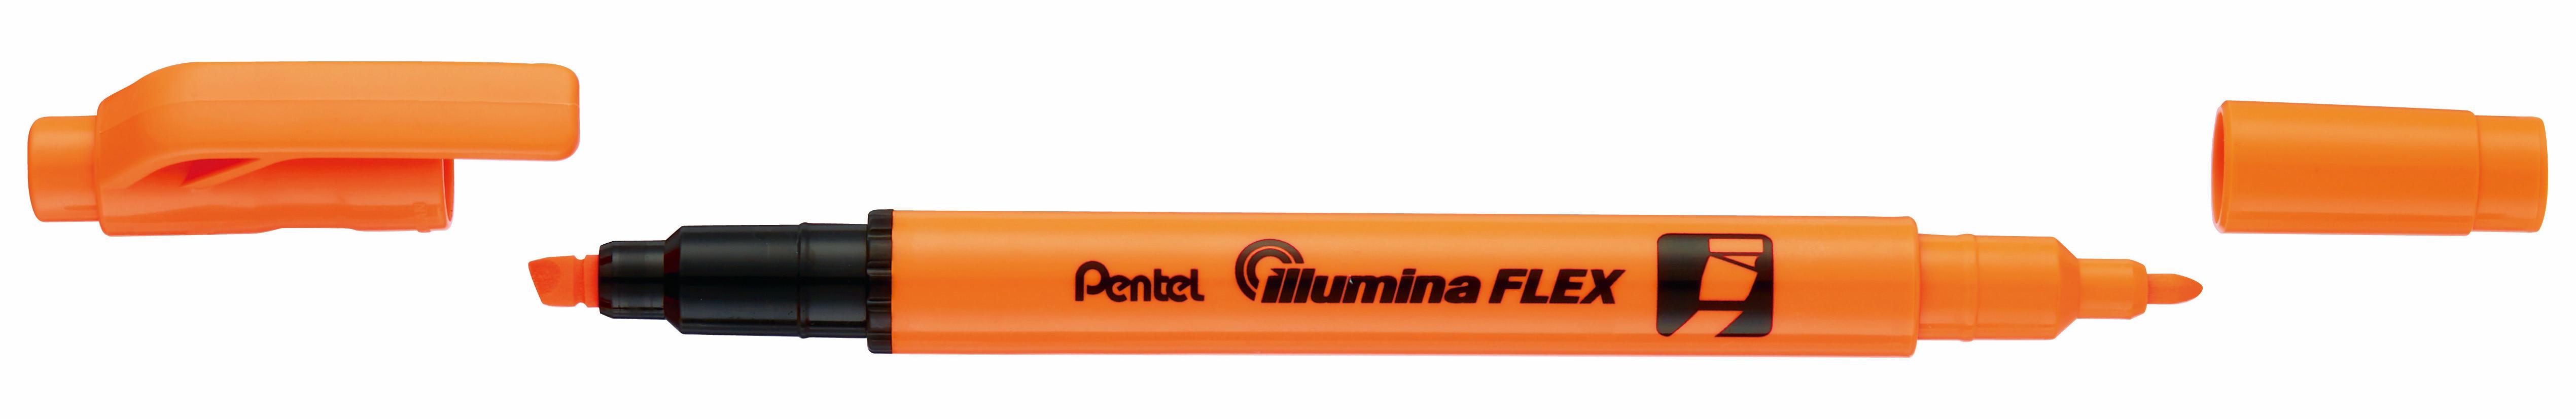 Pentel  Pentel Illumina Flex evidenziatore 1 pz Punta sottile/smussata Arancione 